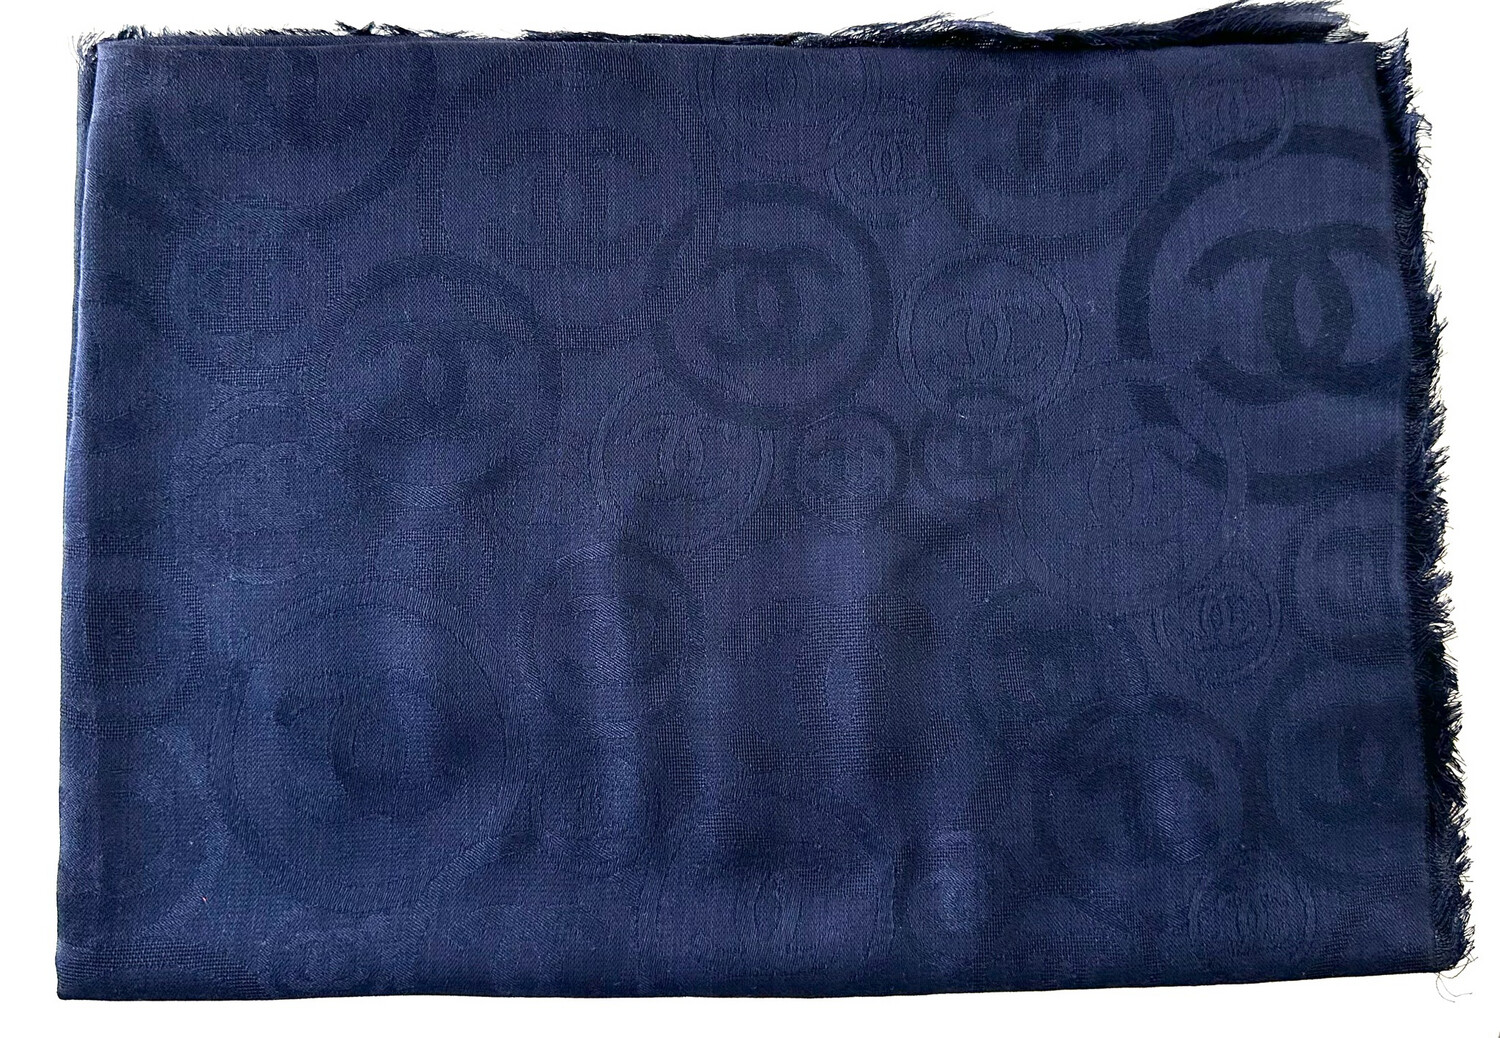 chanel cashmere shawl